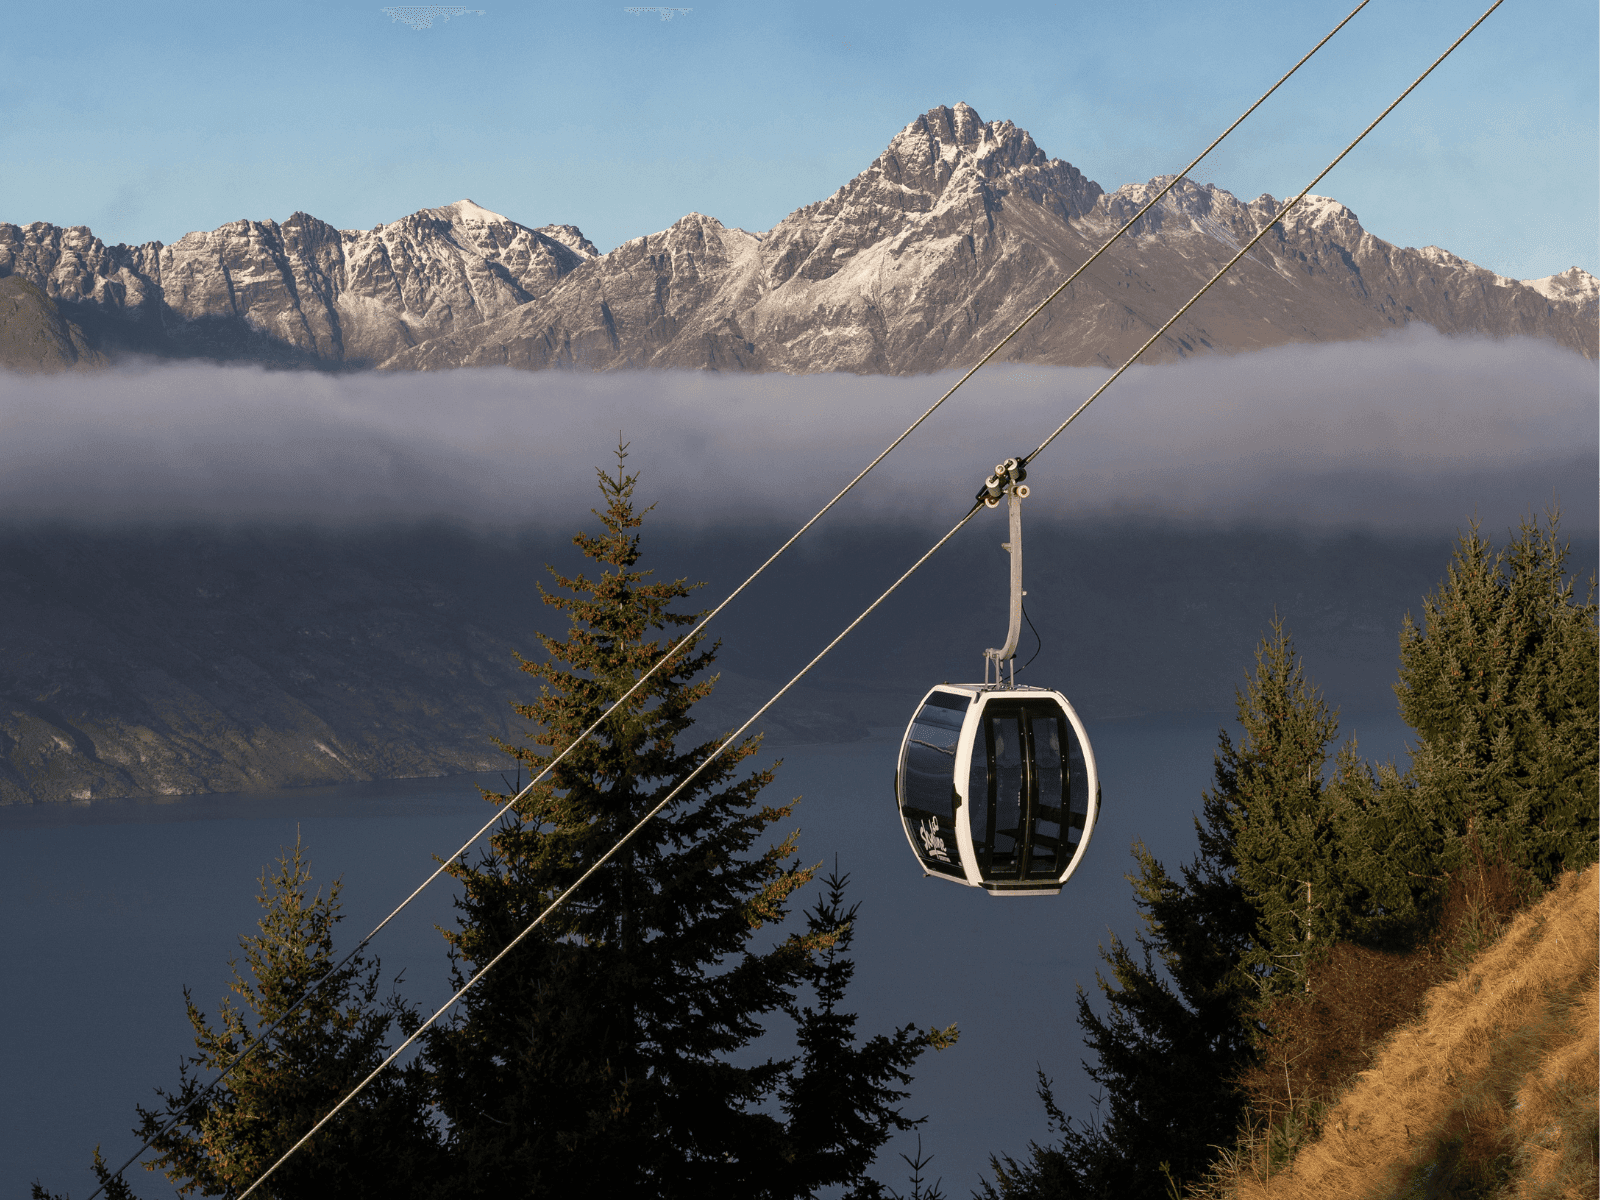 Gondola going up mountain over mist